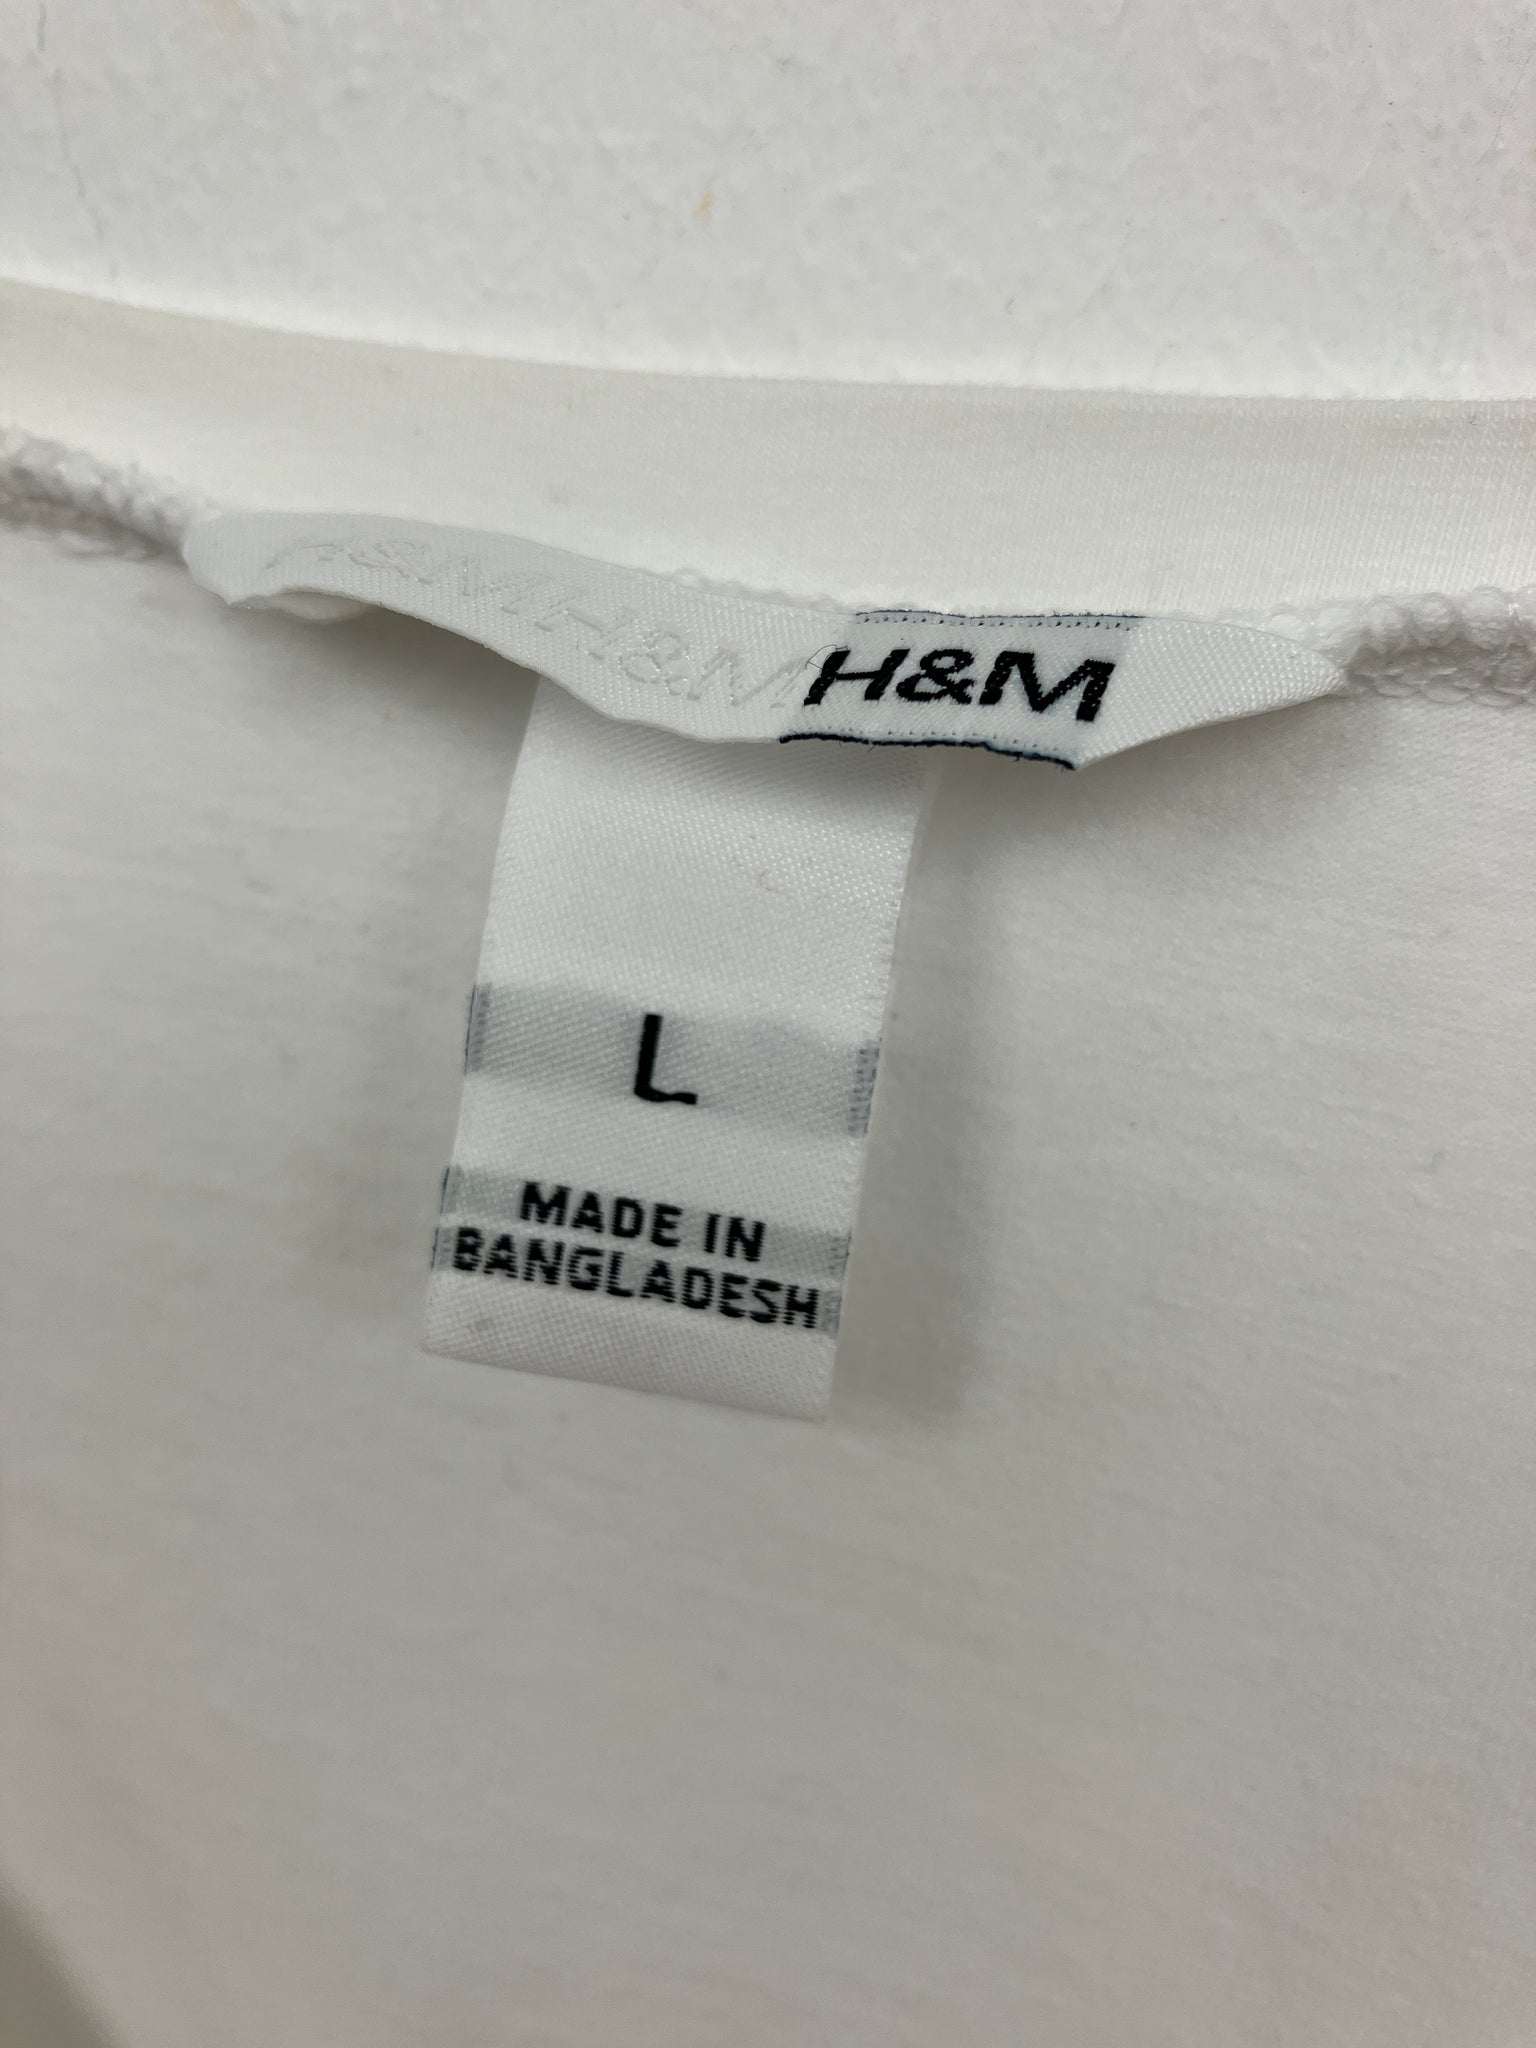 H&m T-shirt